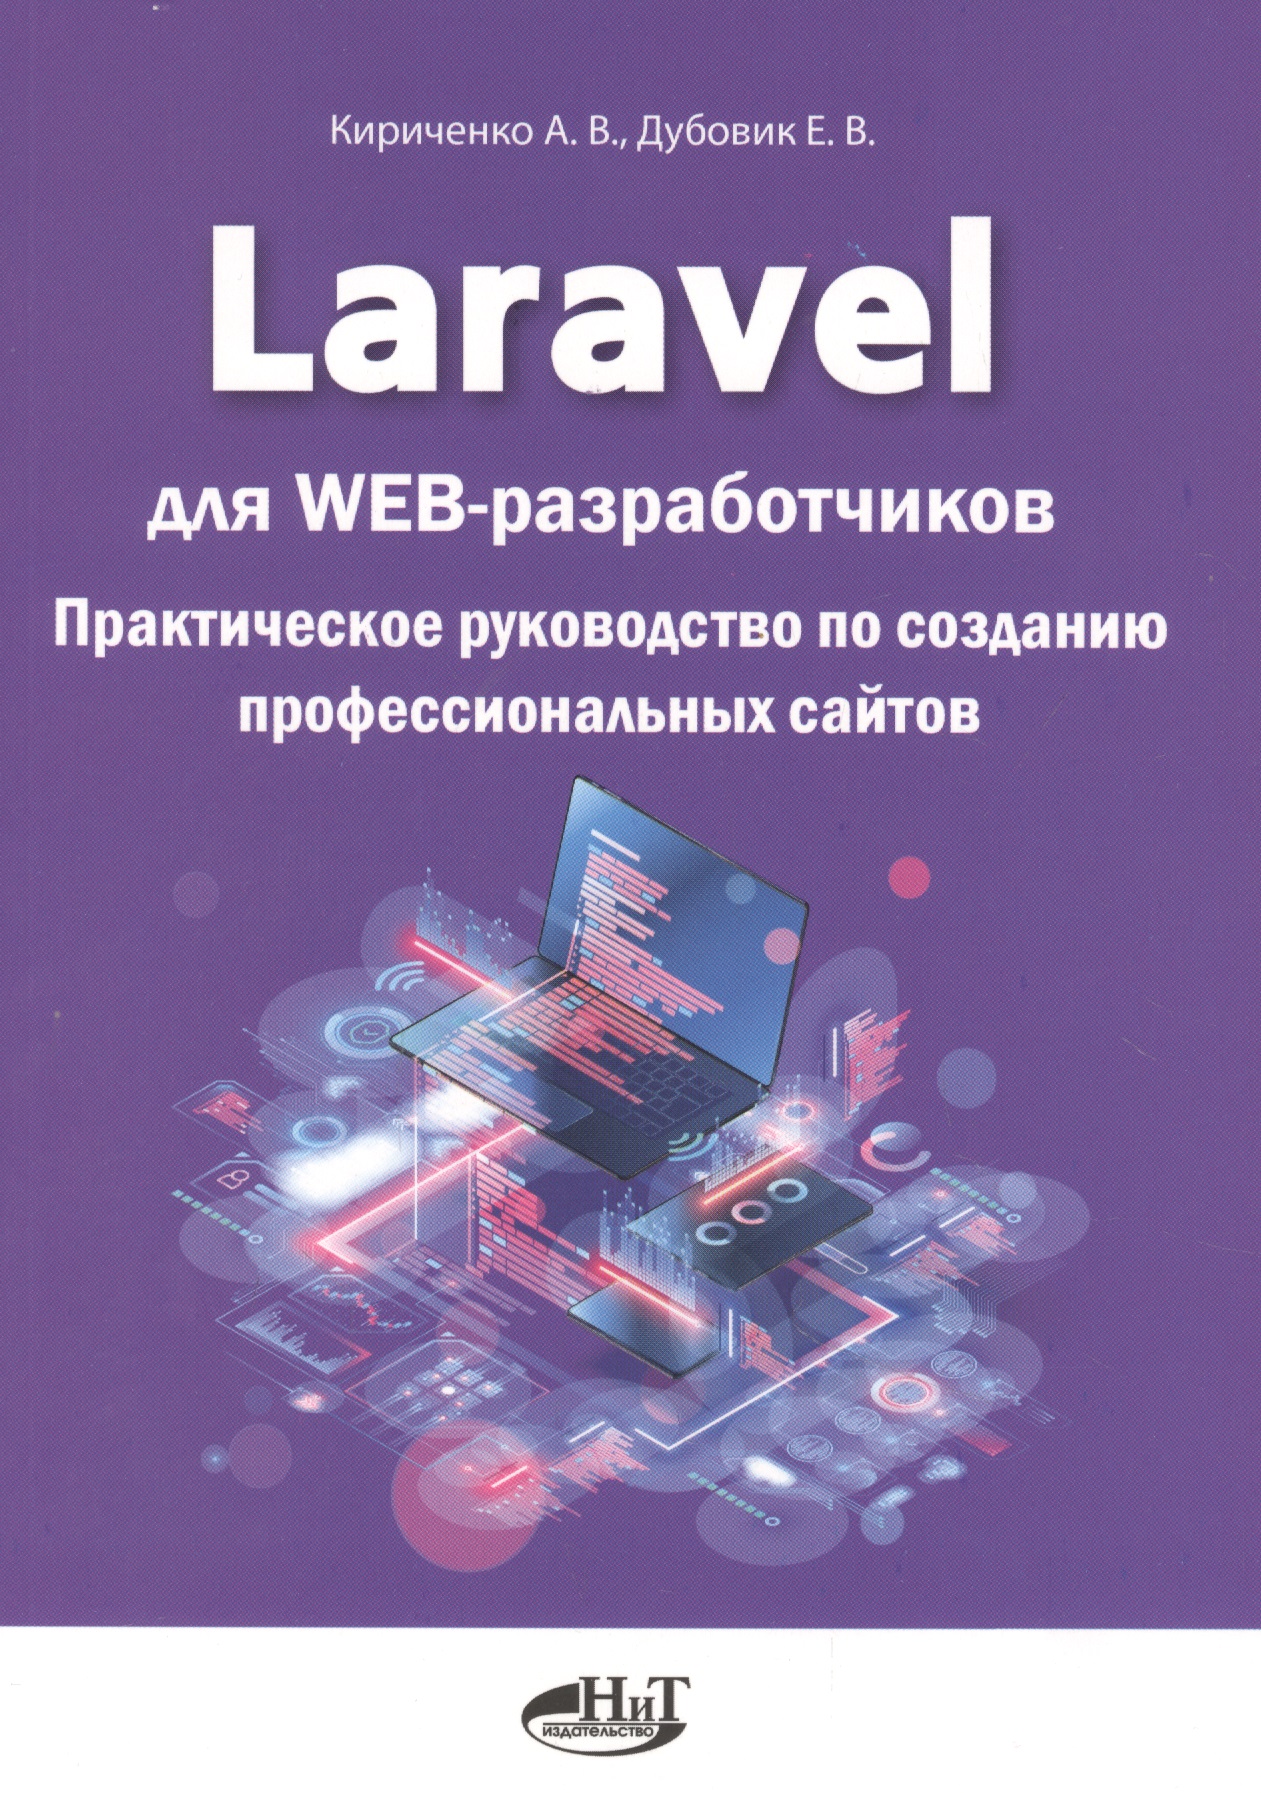 Laravel  web-.      